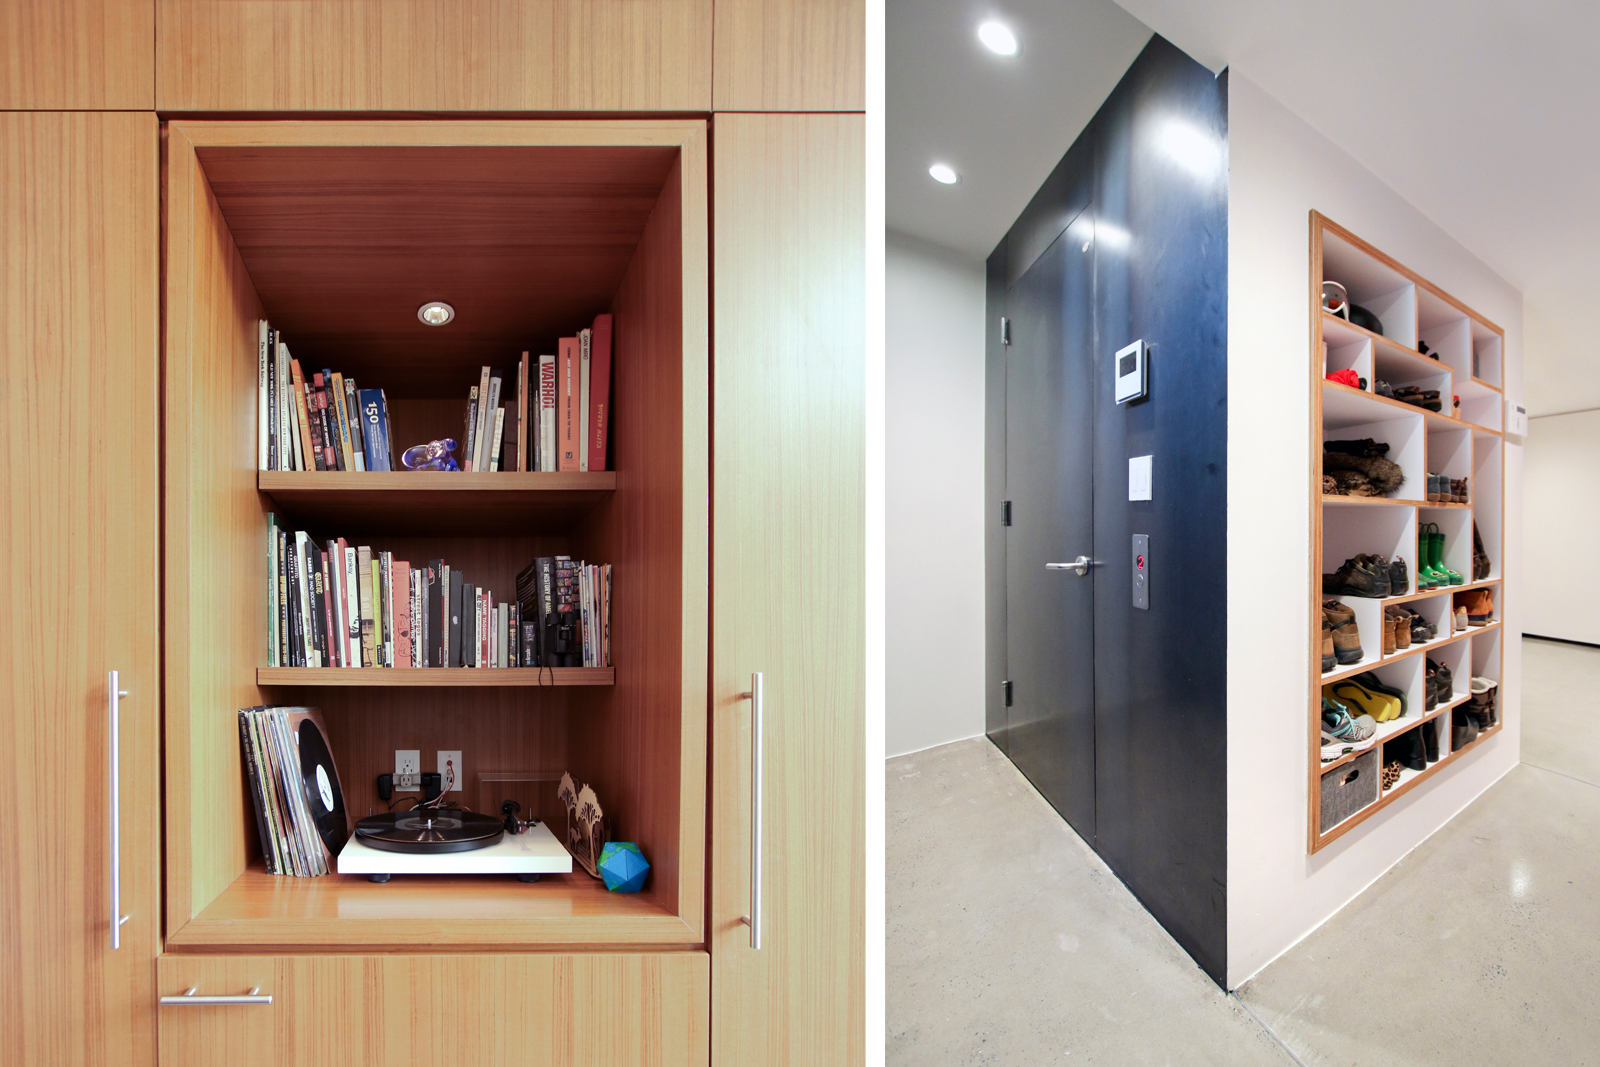 res4-resoltuion-4-architecture-modern-brownstone-home-renovation-interior-elevator-millwork-cabinets-shelves-details.jpg